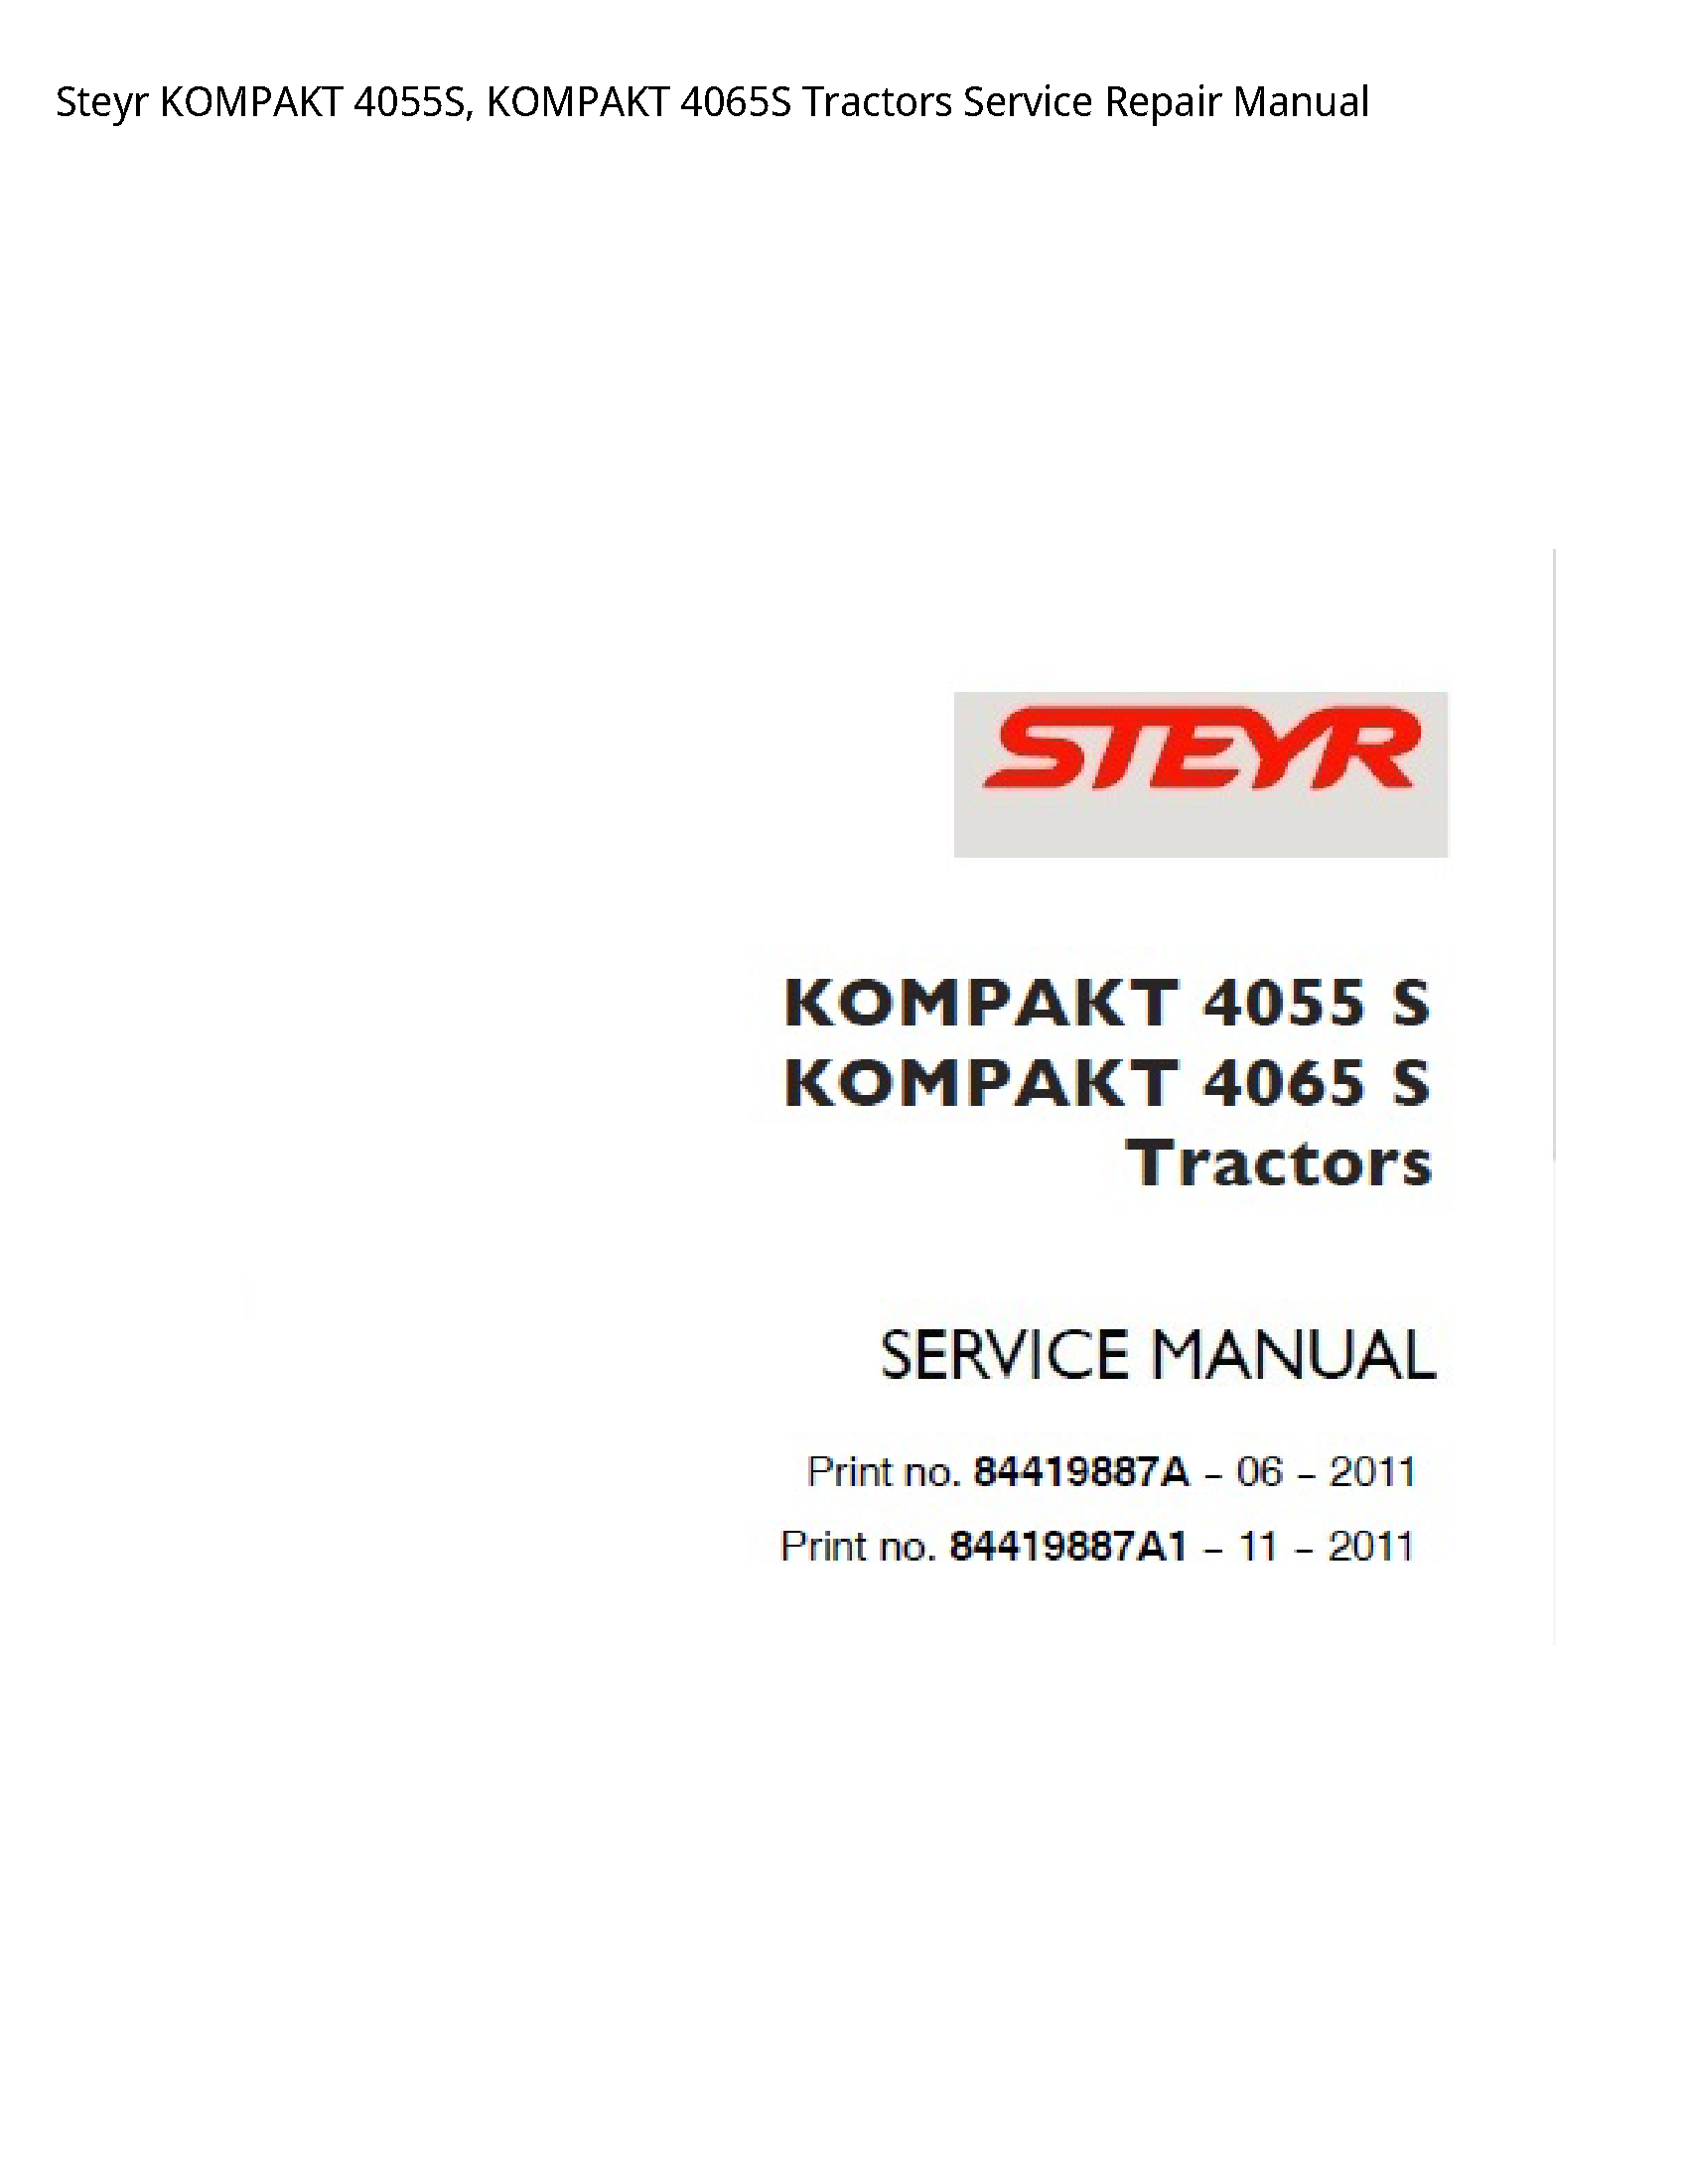 Steyr 4055S KOMPAKT KOMPAKT Tractors manual